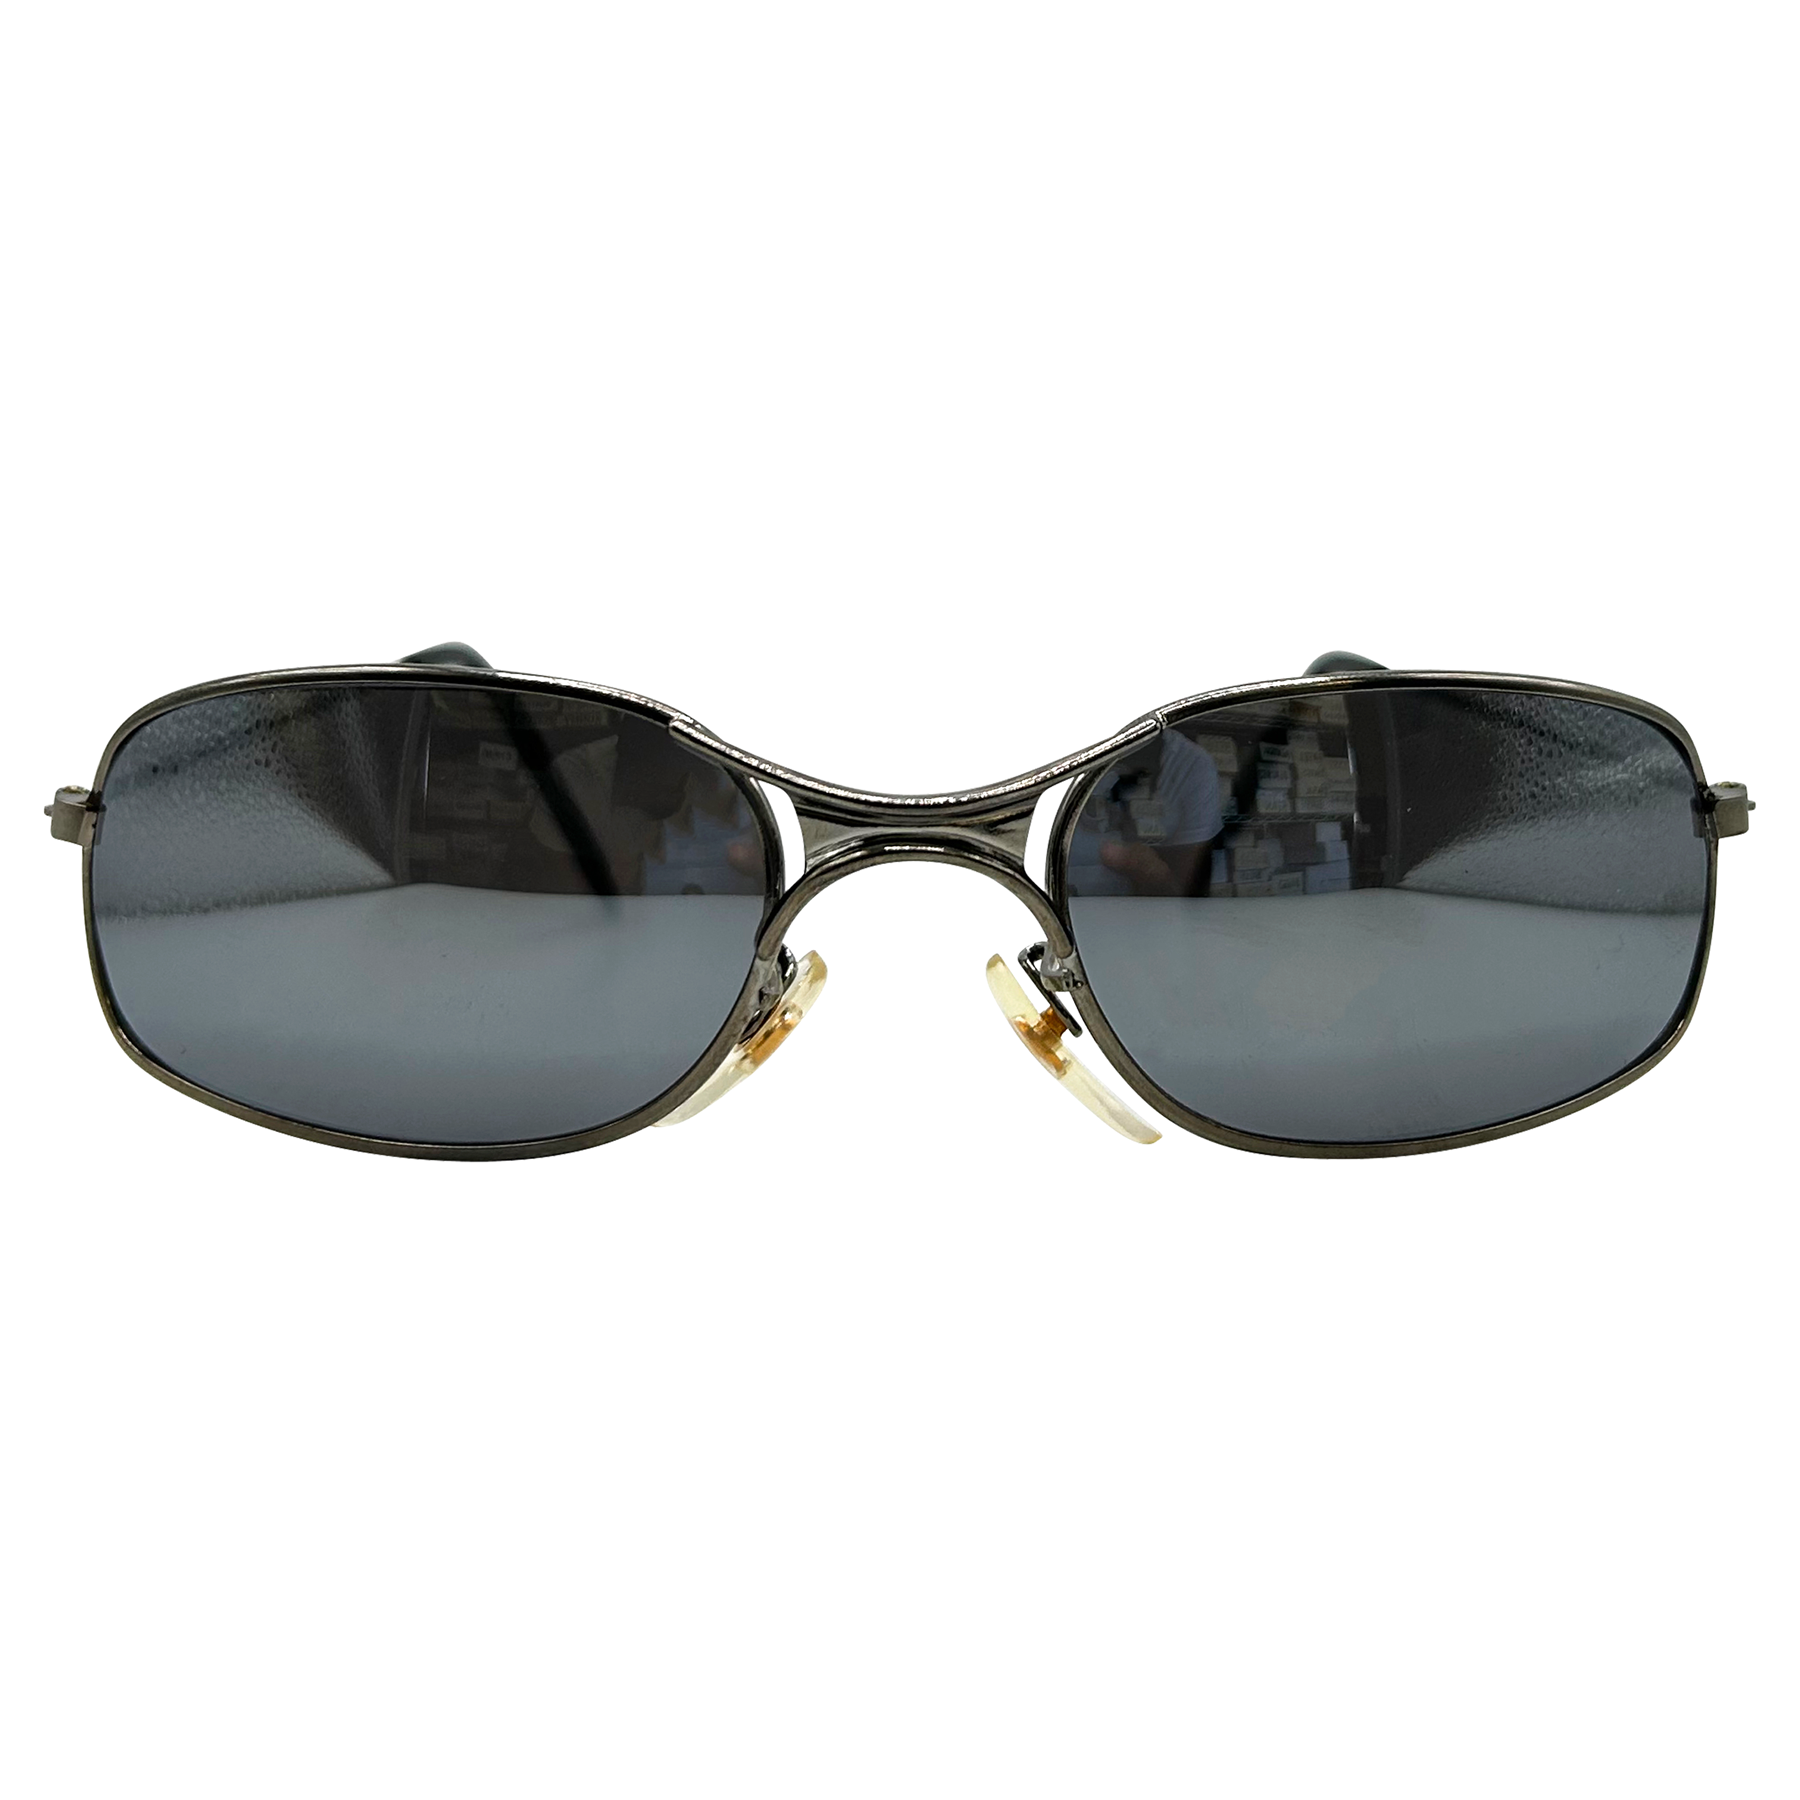 SUPERNOVA Square 90s Sunglasses